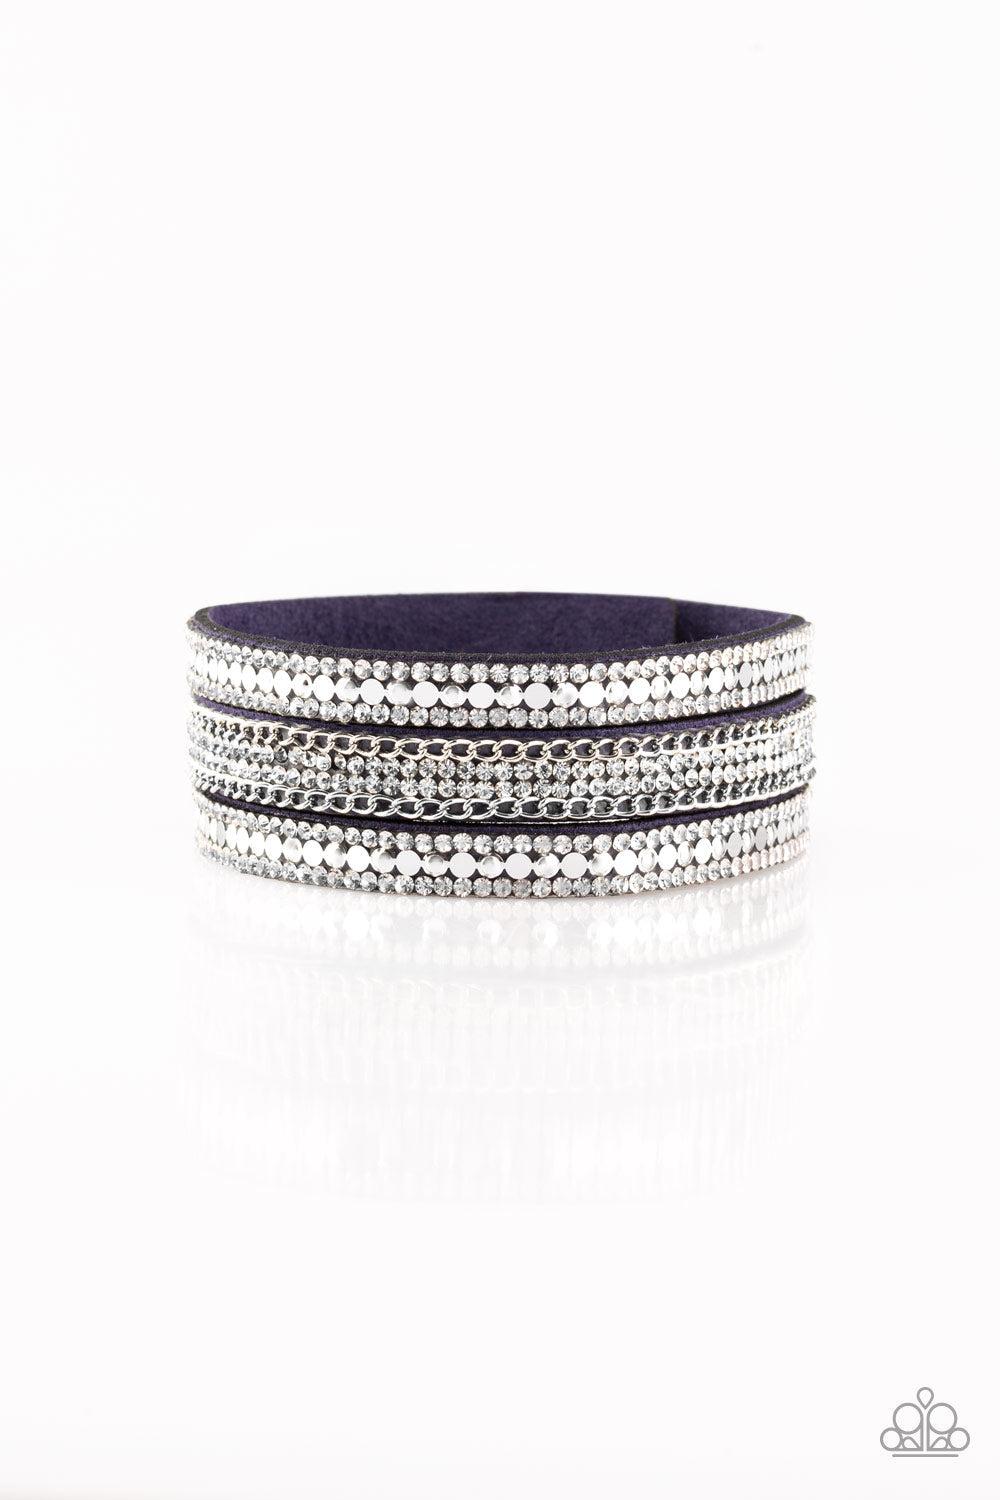 Fashion Fanatic Blue Wrap Bracelet - Paparazzi Accessories- lightbox - CarasShop.com - $5 Jewelry by Cara Jewels